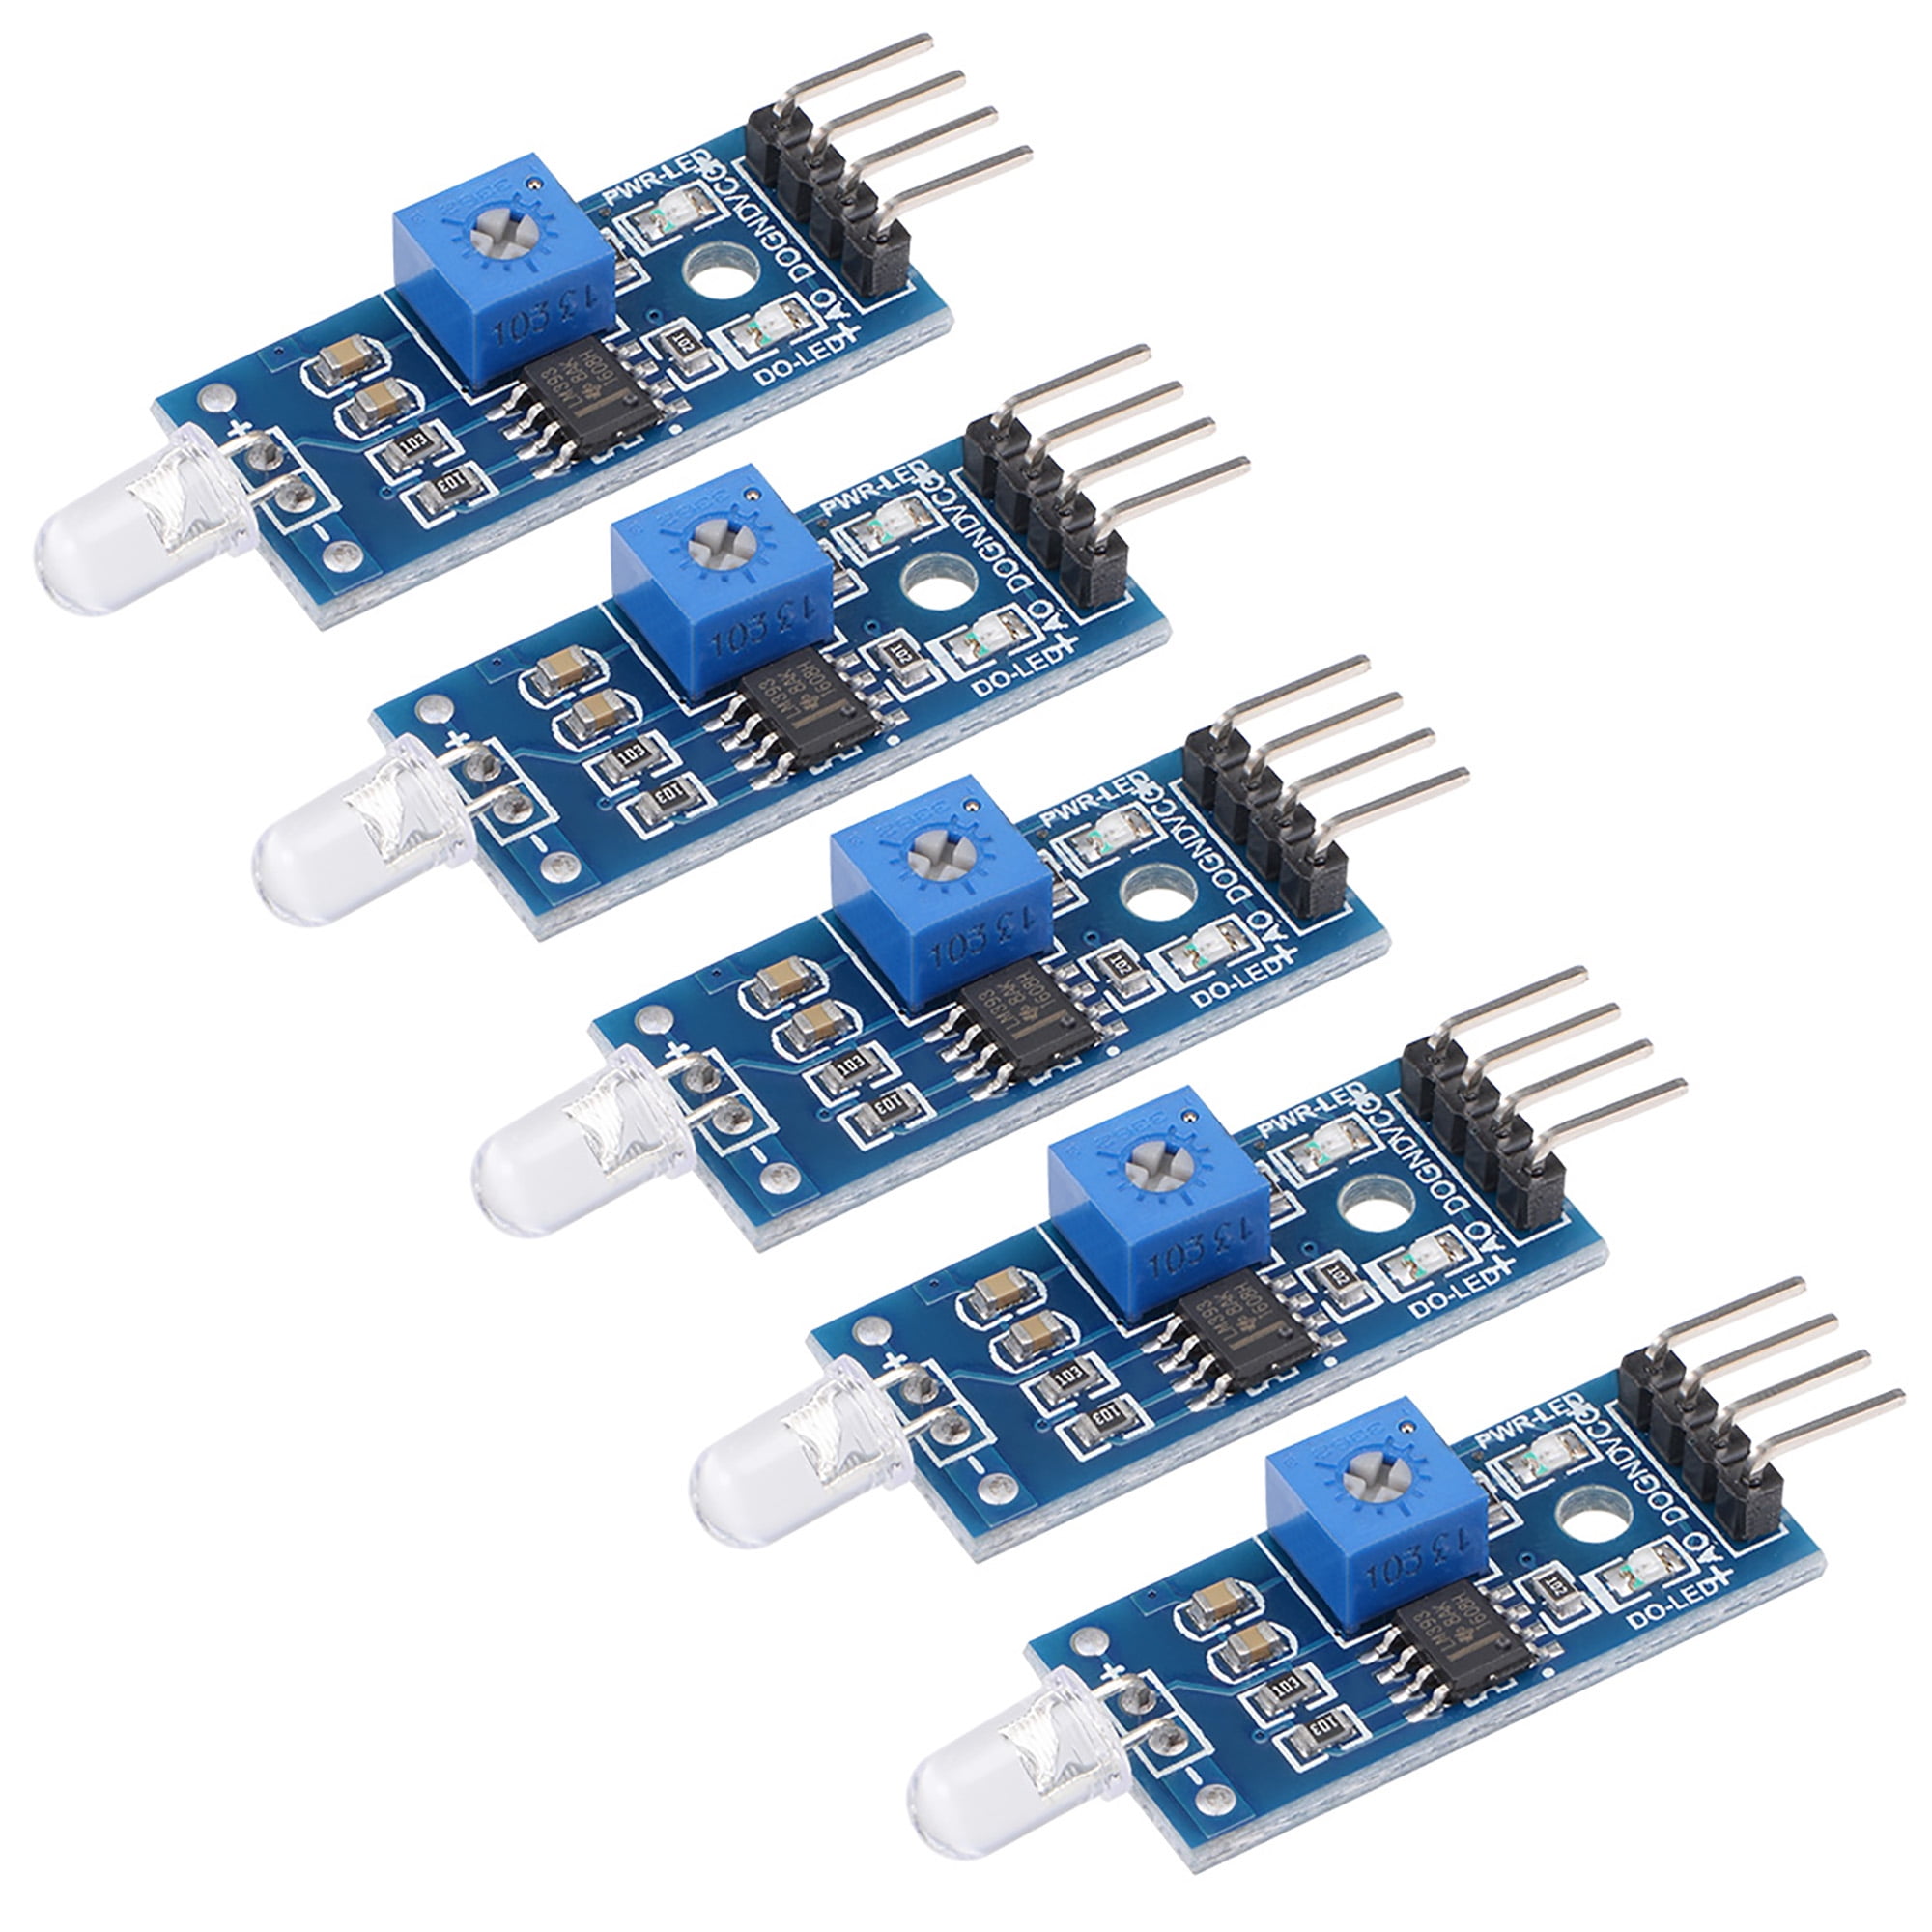 10 PCS Digital Intensity Detection Photosensitive Sensor Module for Arduino UNO 